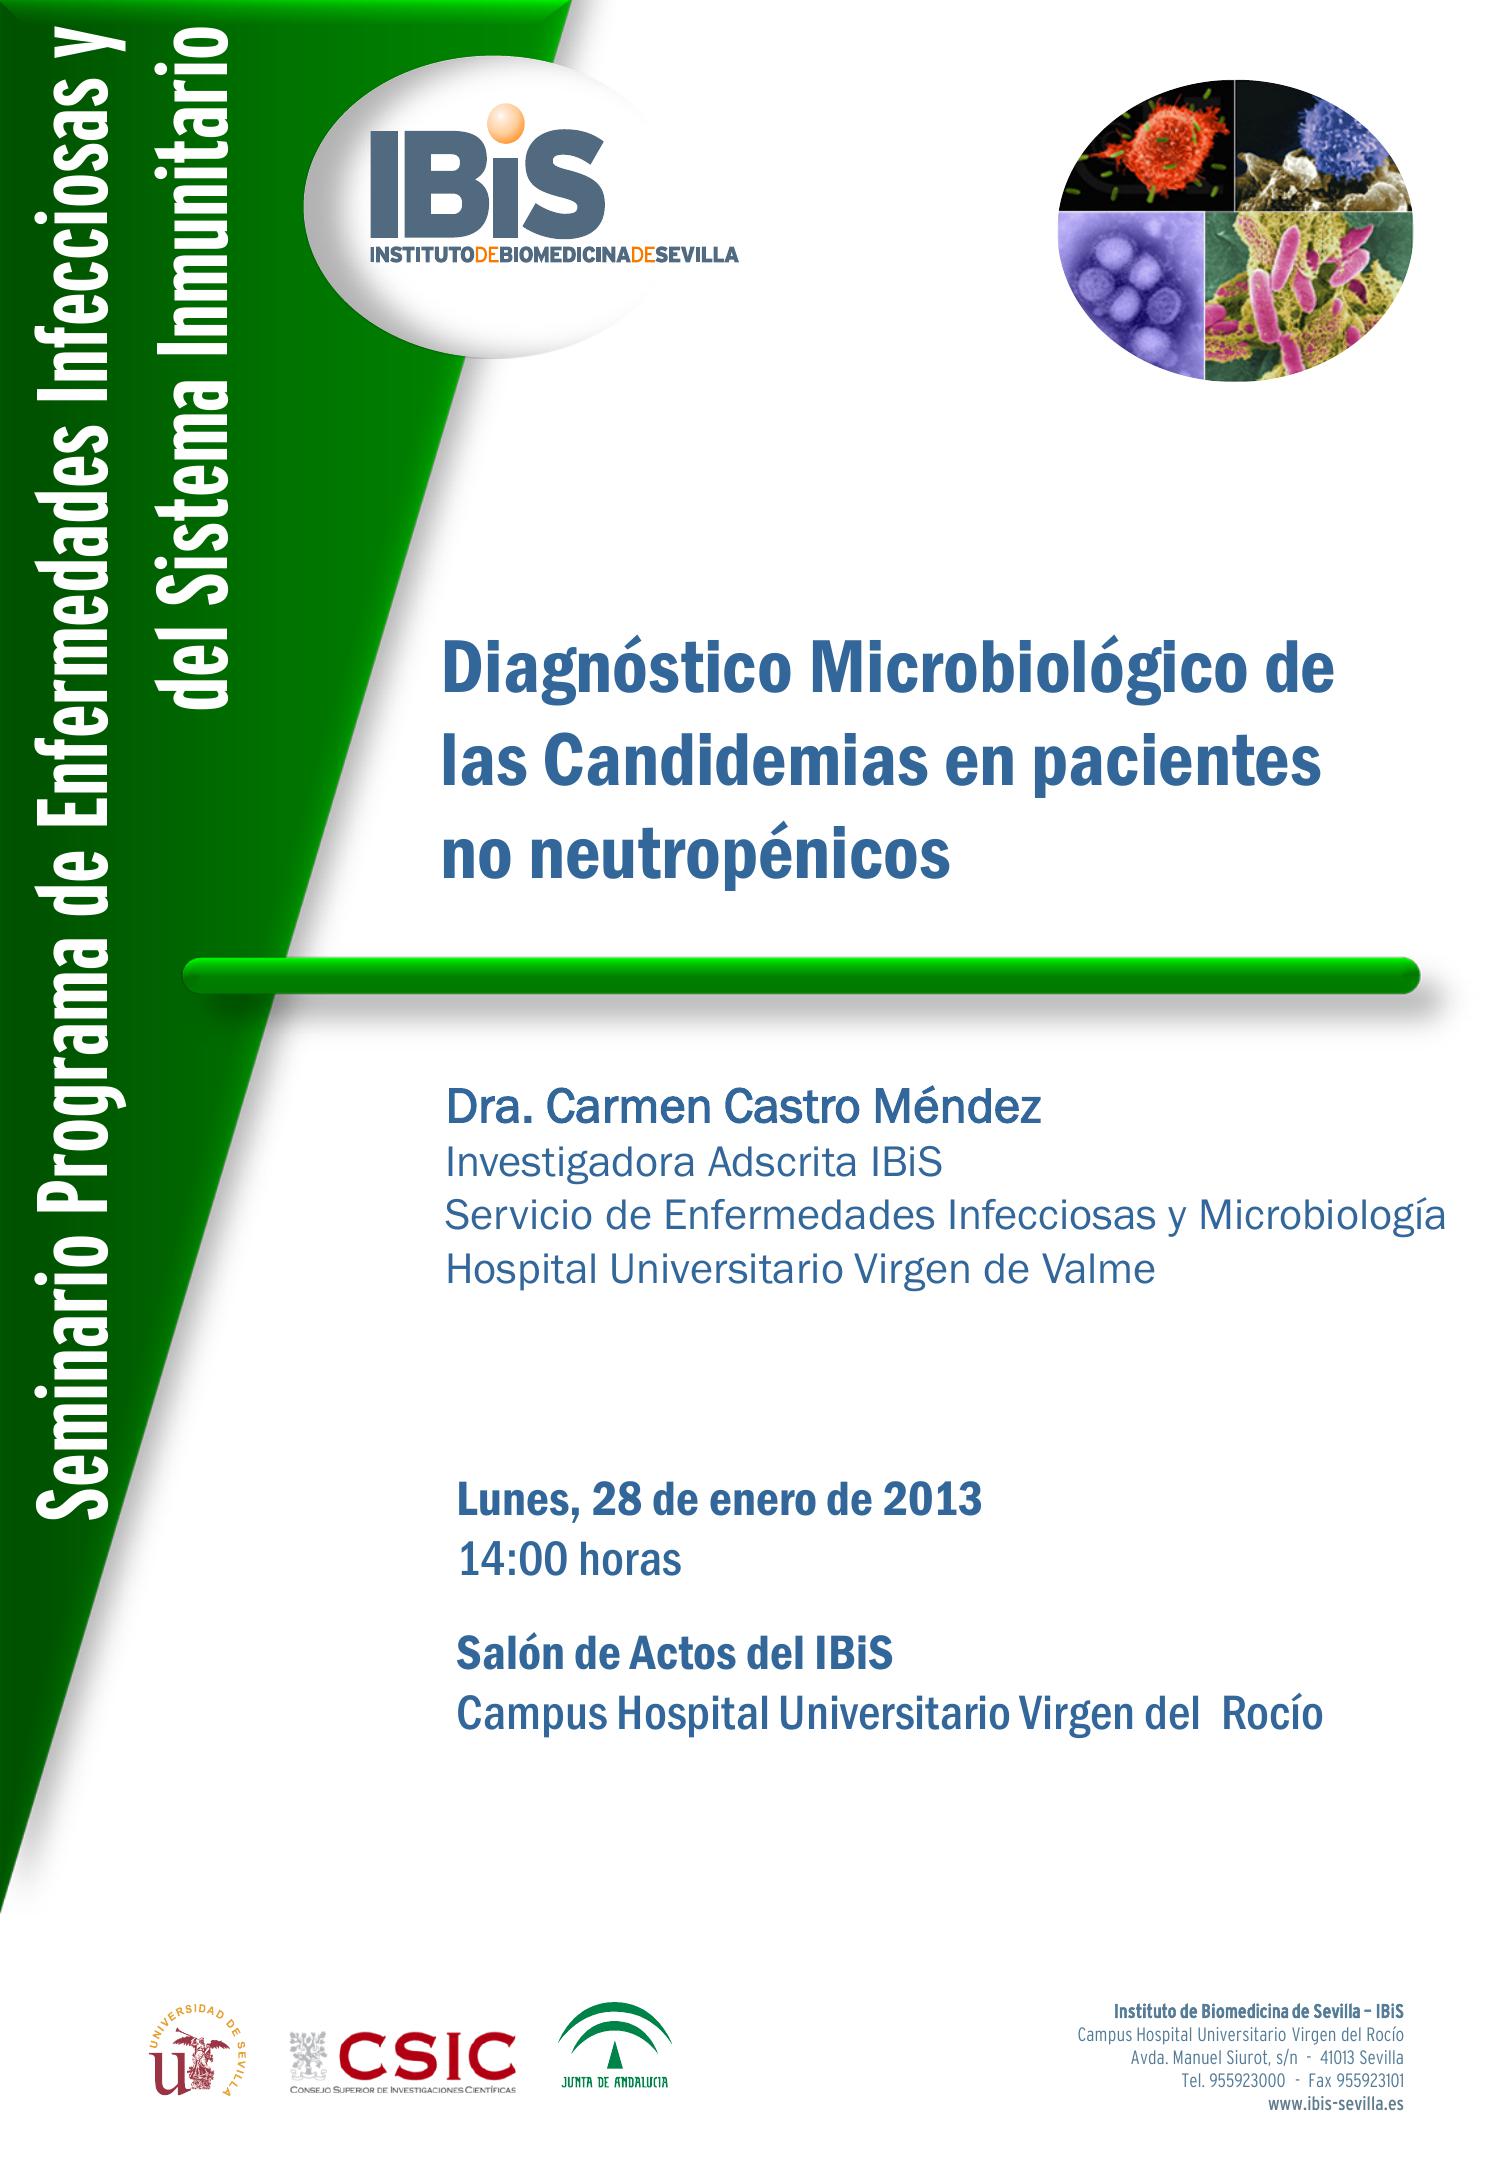 Poster: Diagnóstico Microbiológico de las Candidemias en pacientes no neutropénicos.